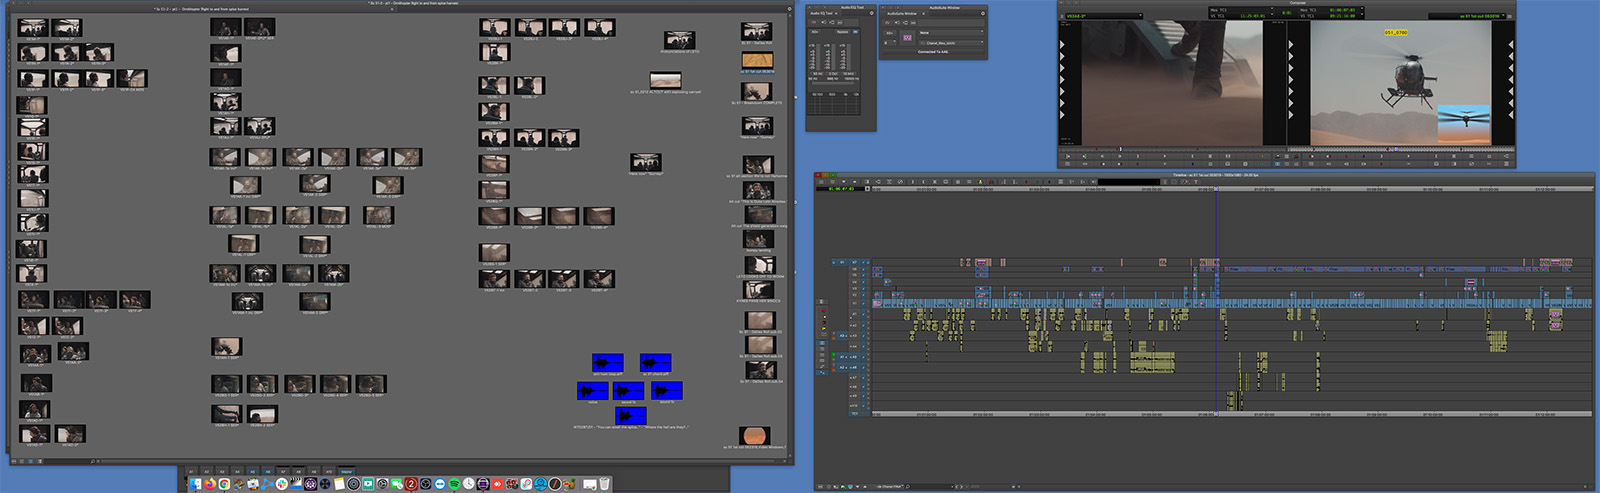 Dual monitor video of Avid edit timeline for Dune's ornithopter scene